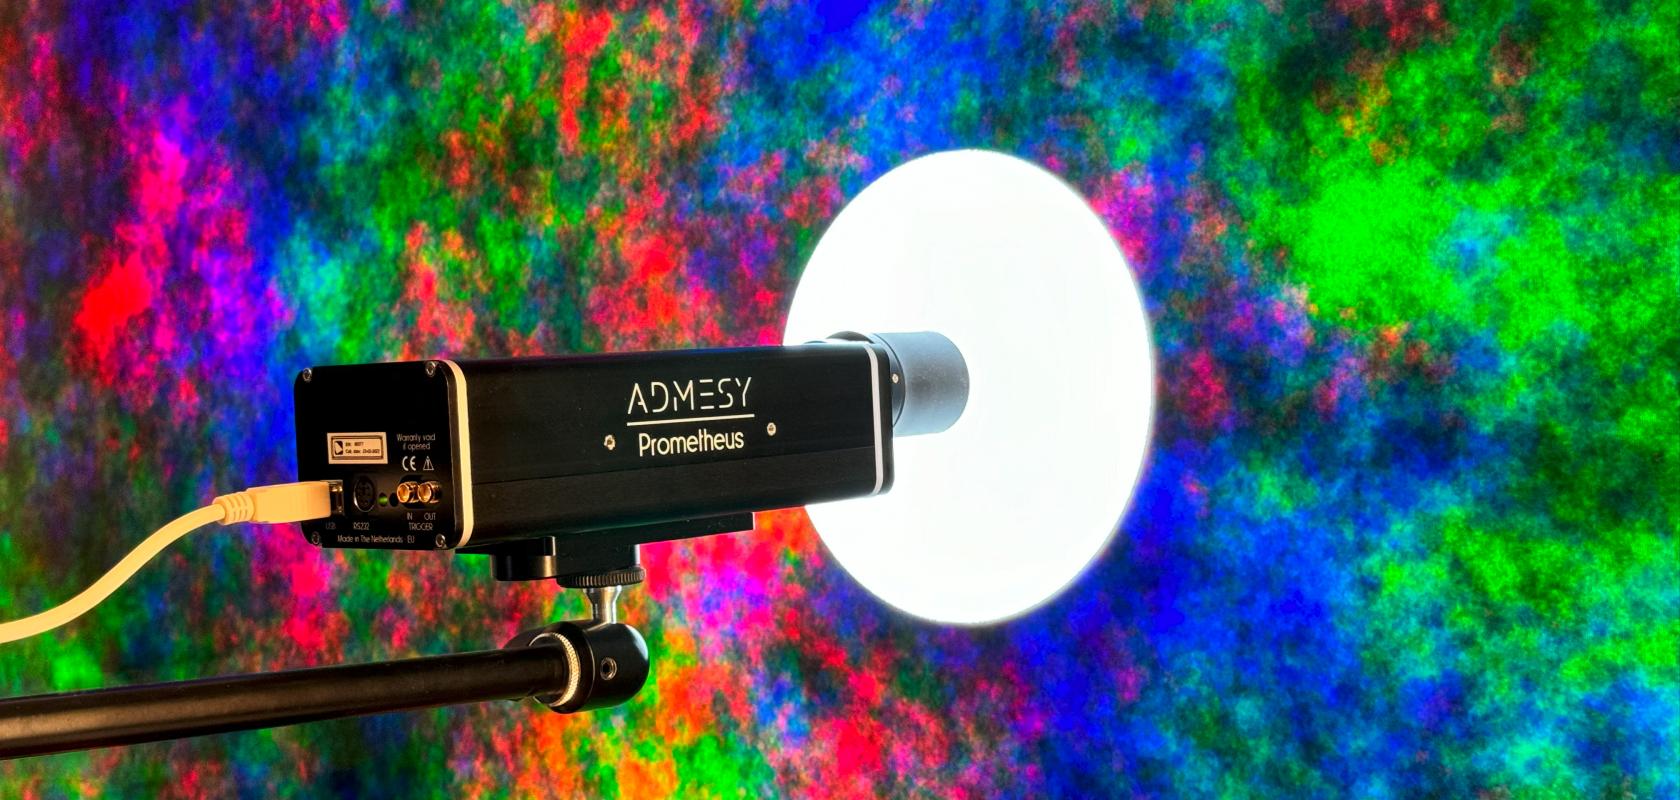 Admesy Prometheus Colorimeter performing critical HDR measurements